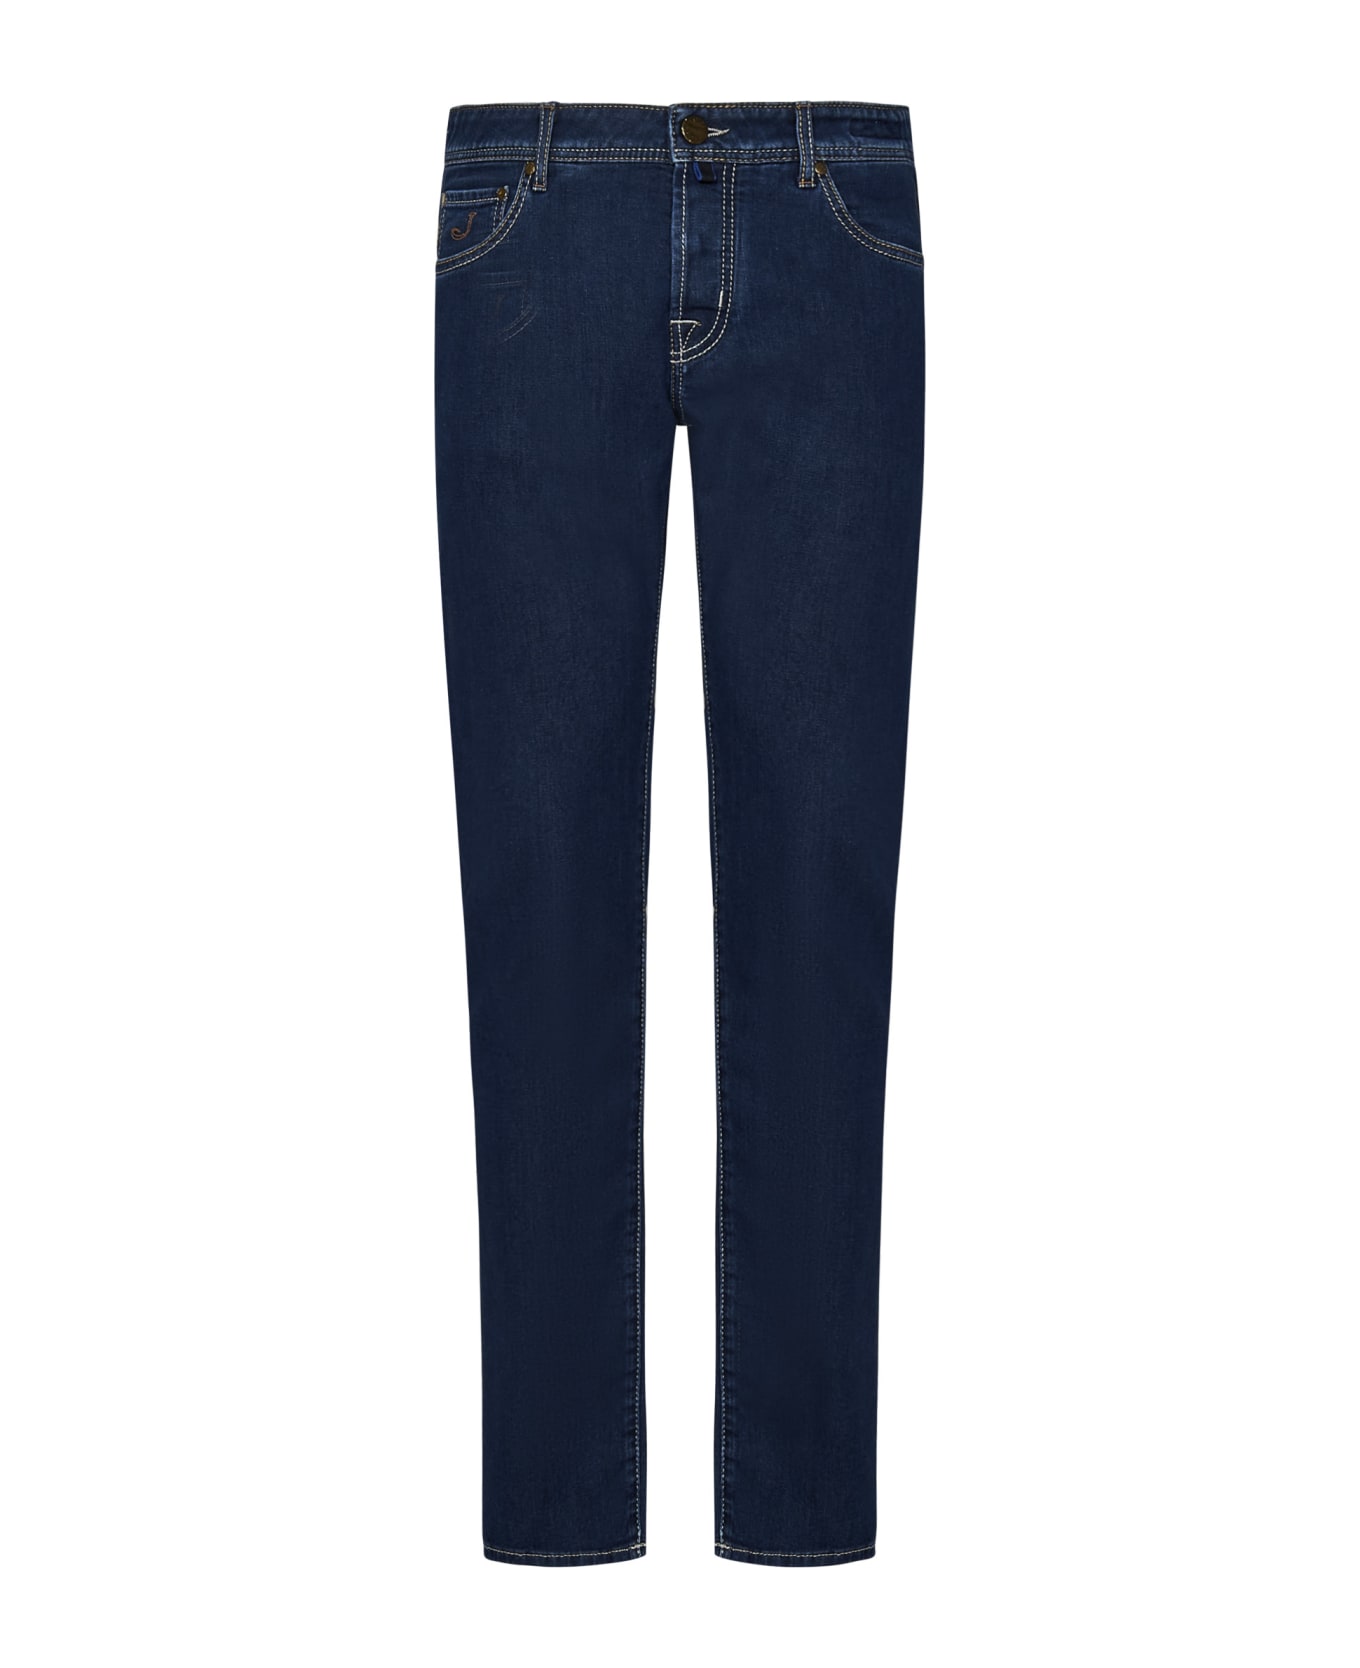 Jacob Cohen Nick Slim Jeans Jeans - BLU